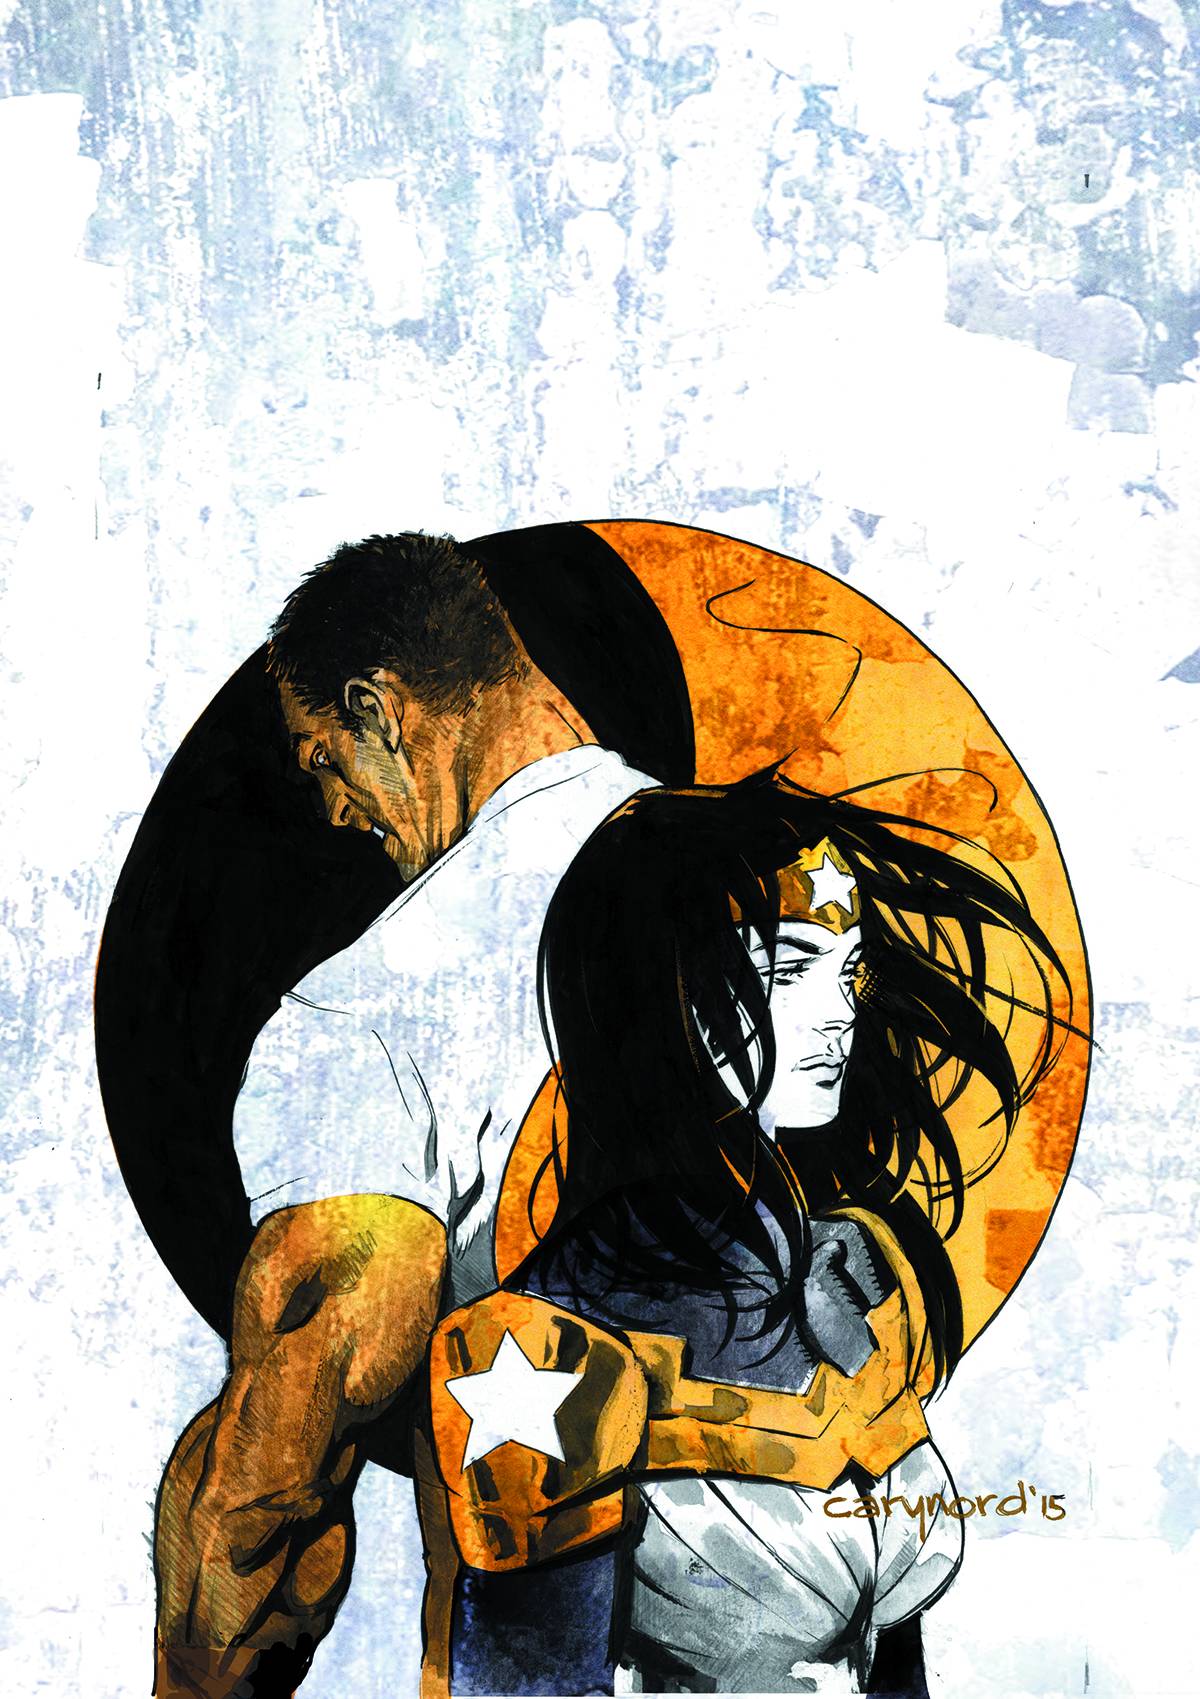 Superman Wonder Woman #22 (2013)